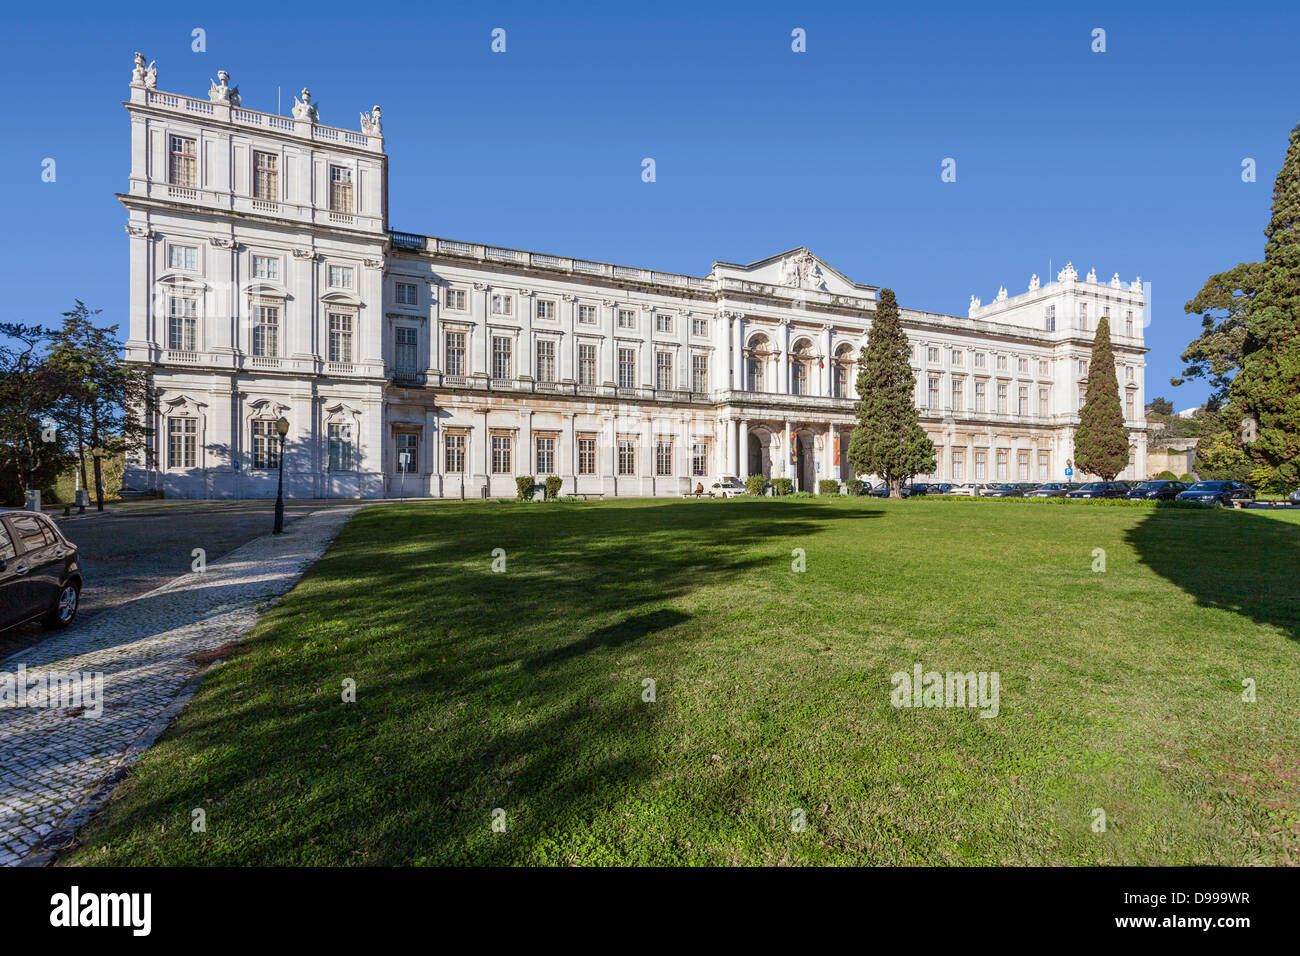 Ajuda National Palace. Lisbon, Portugal. 19th century neoclassical Royal palace / palacio nacional da ajuda palace castle royal Lisboa royal museum Stock Photo